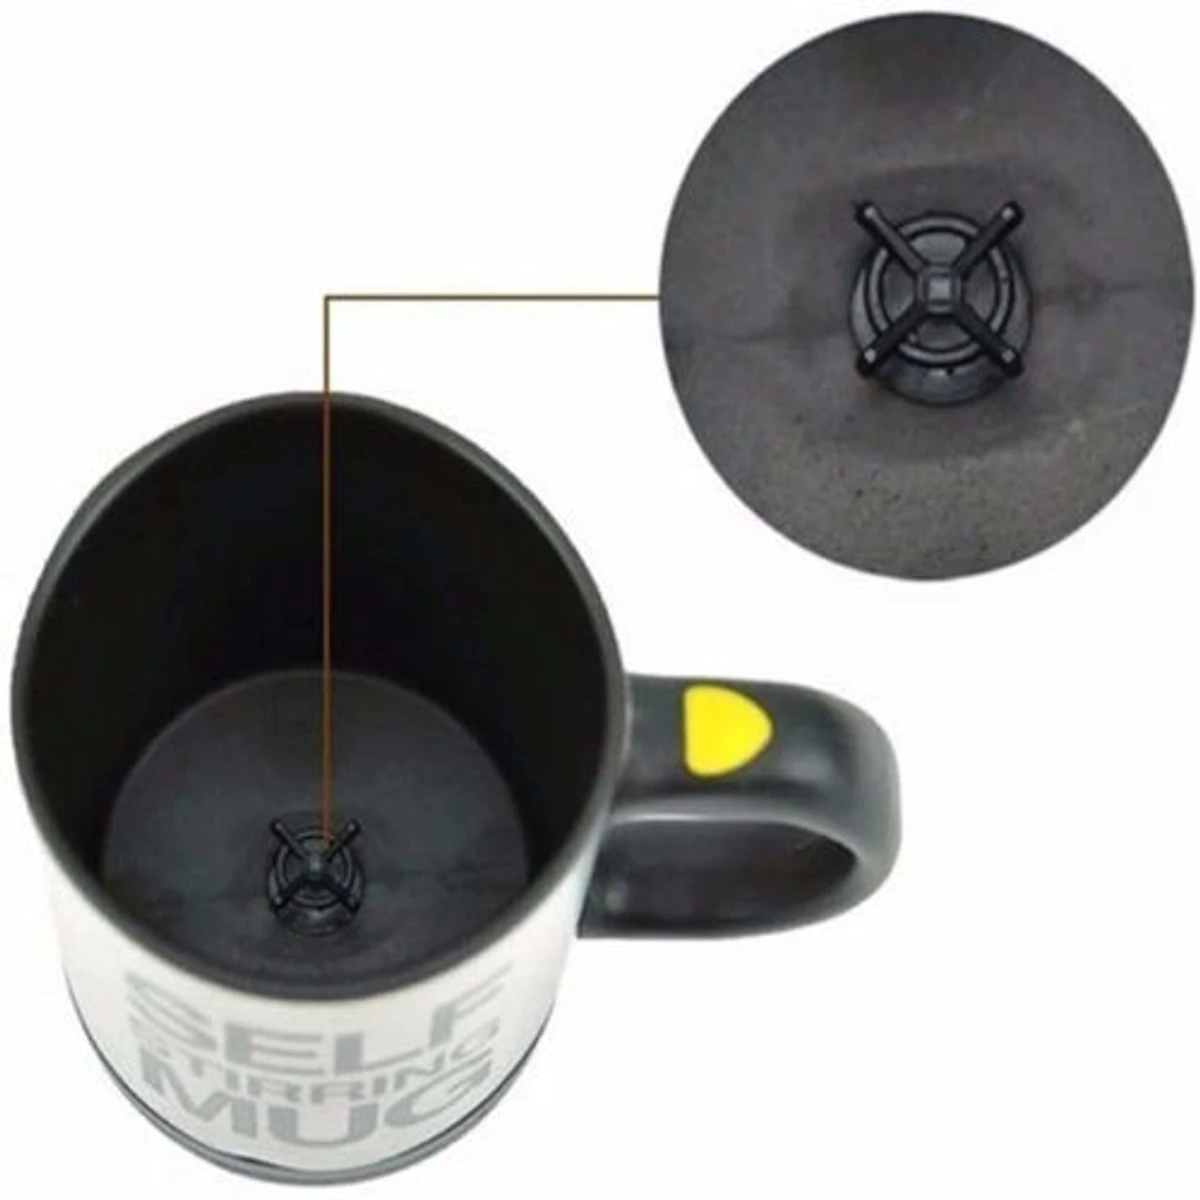 Multicolor Self Stirring Coffee Milk Mixing Mug Stainless Steel Thermal Cup Electric Smart Cup-1 pcs - Coffee Mug - Coffee Mug